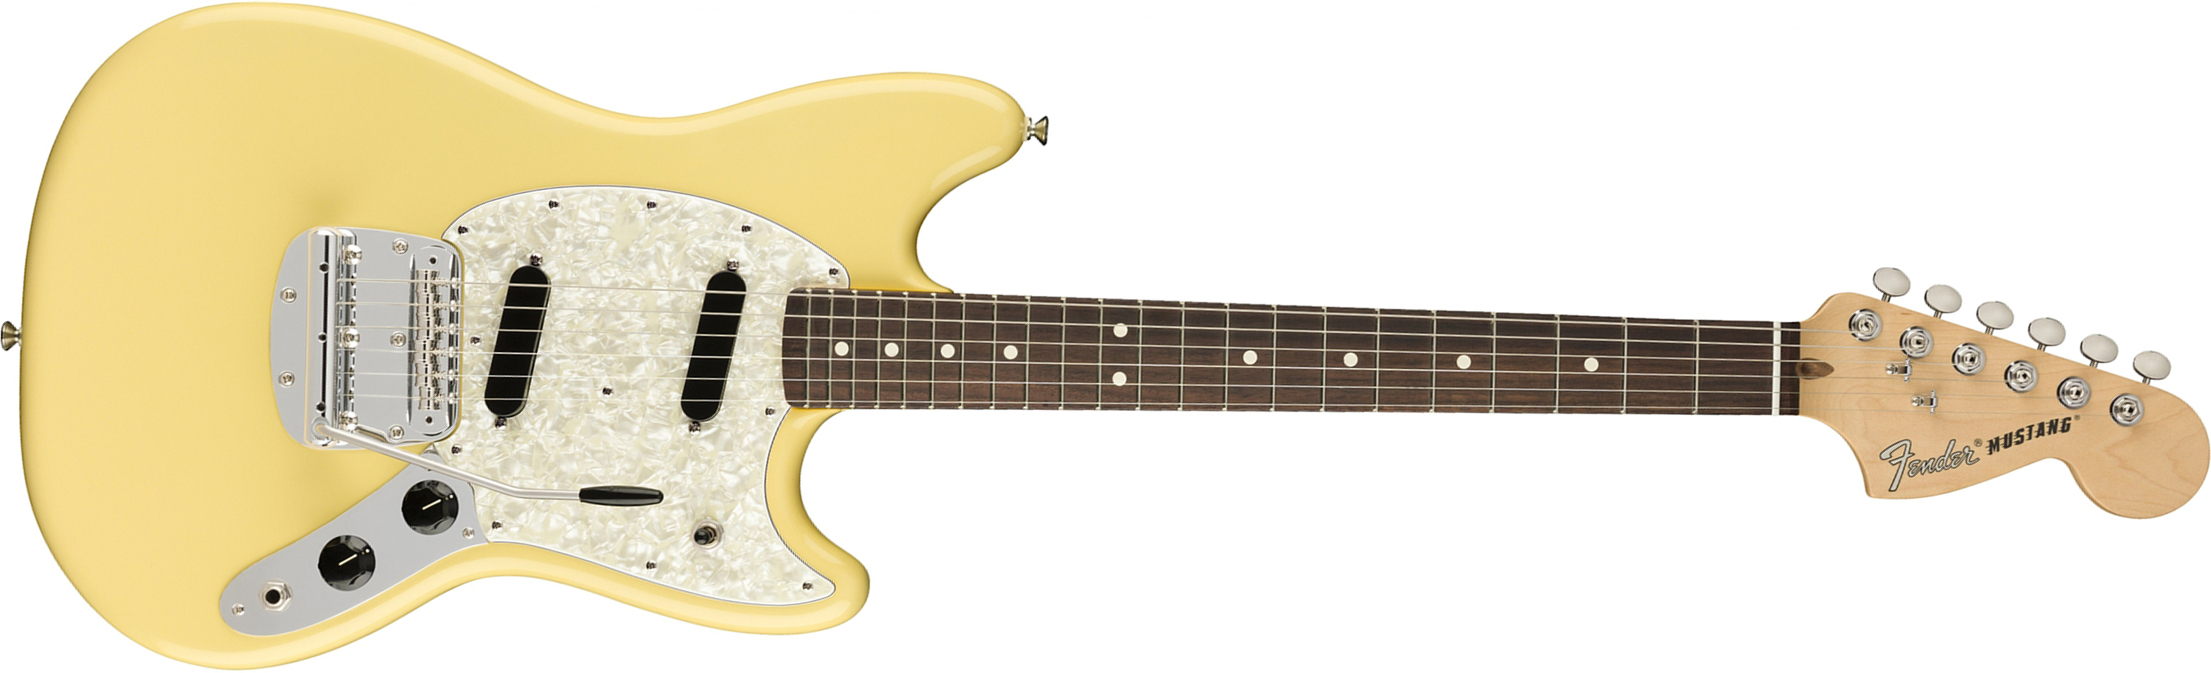 Fender Mustang American Performer Usa Ss Rw - Vintage White - Guitarra eléctrica de doble corte. - Main picture